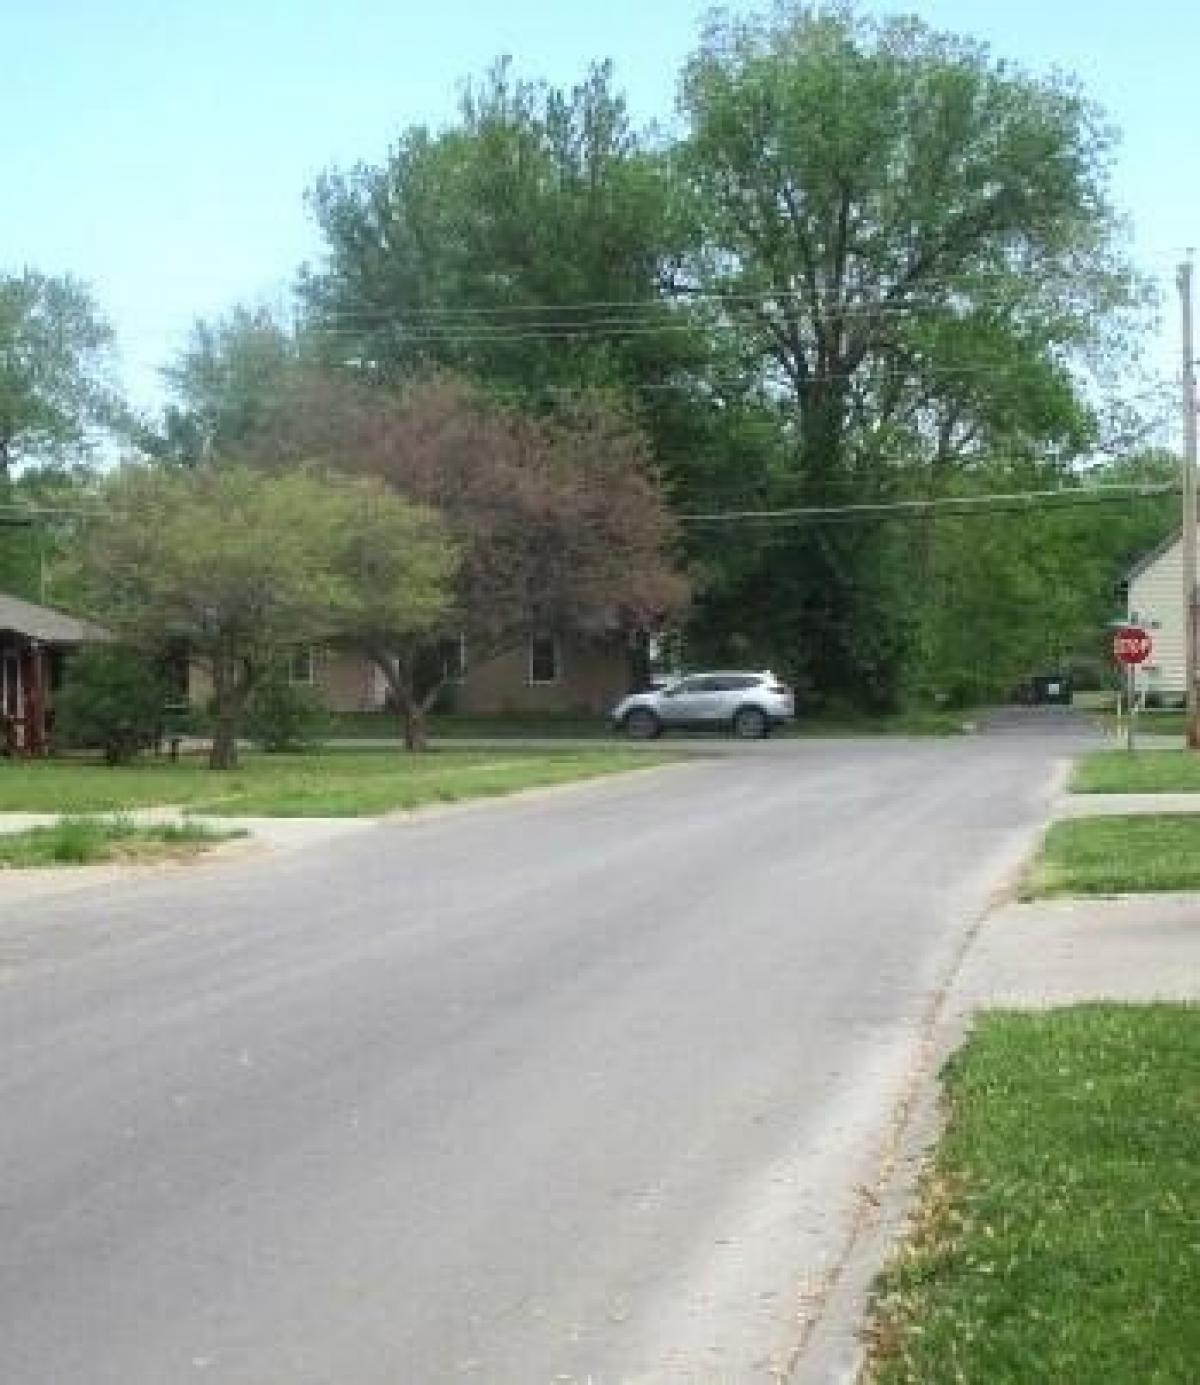 Picture of Home For Sale in Centralia, Missouri, United States